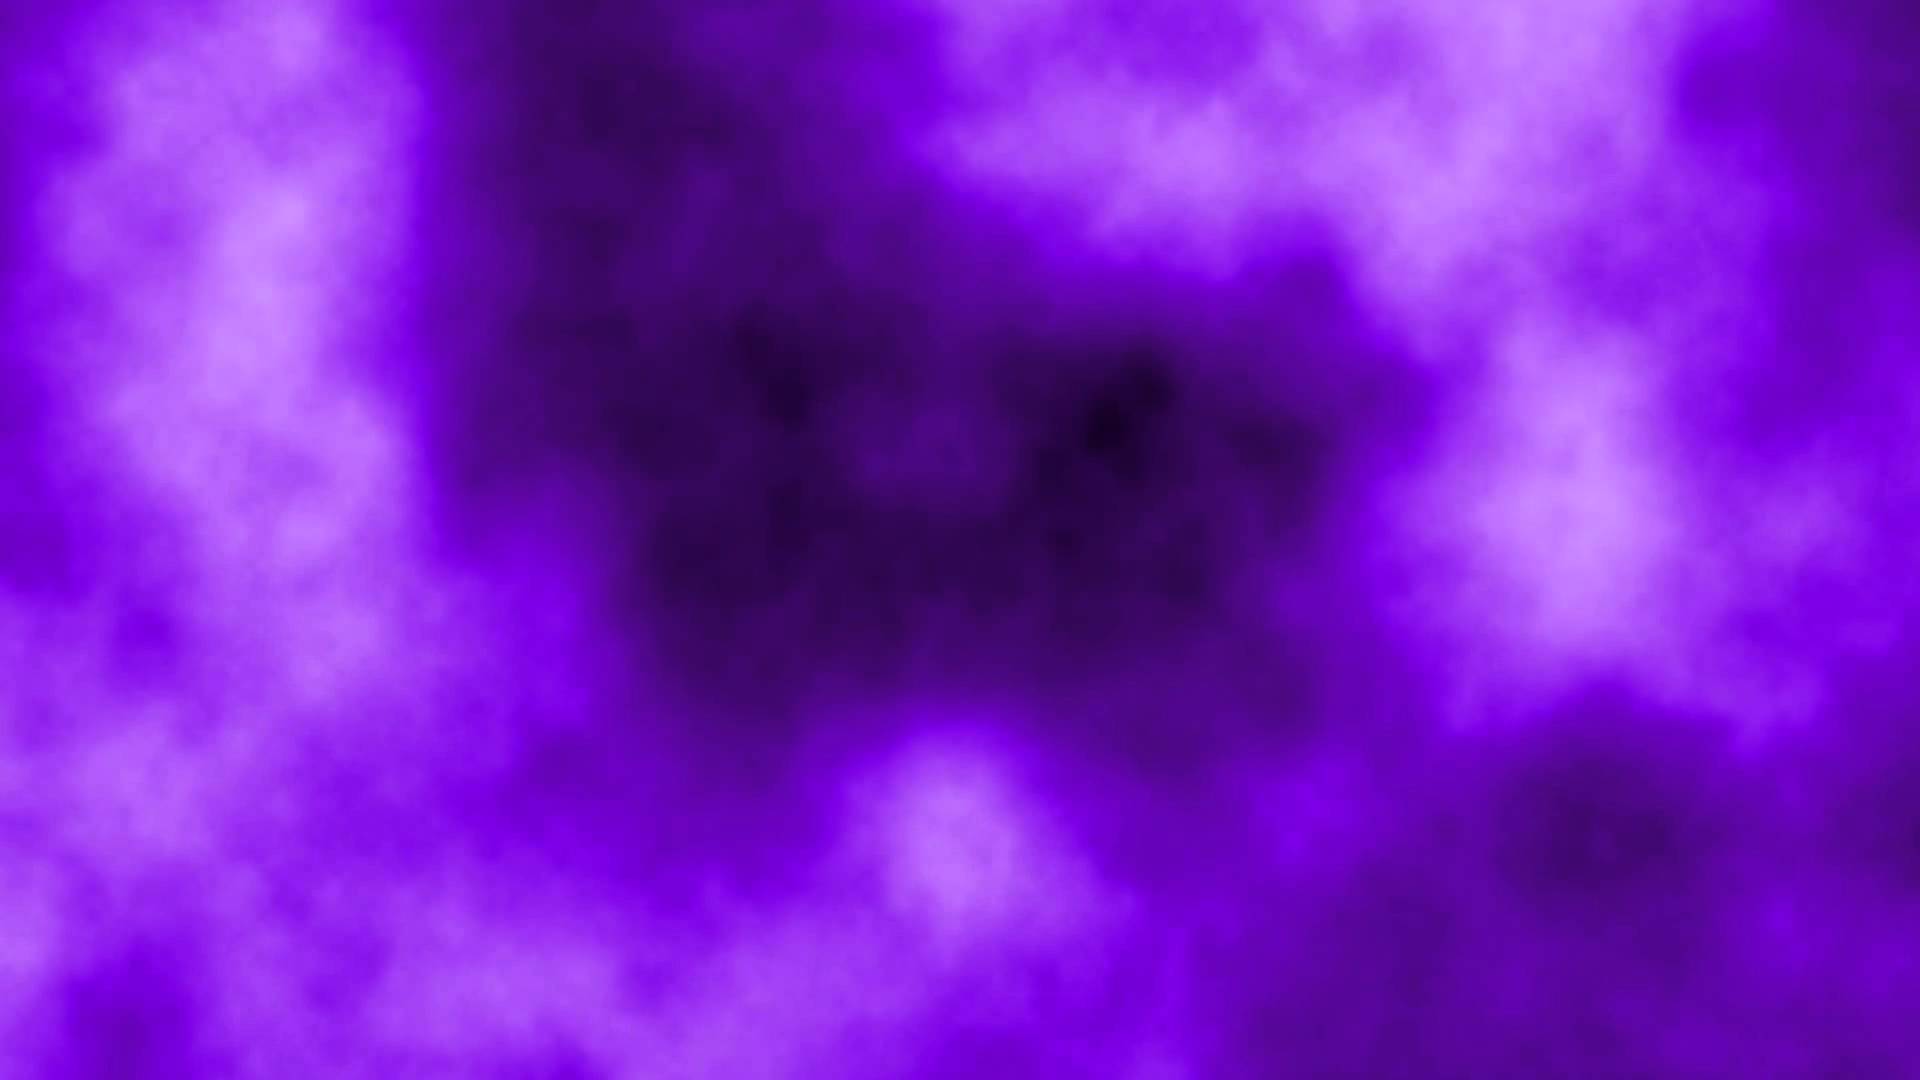 Smoke purple & Light Background ANIMATION FREE FOOTAGE HD - YouTube